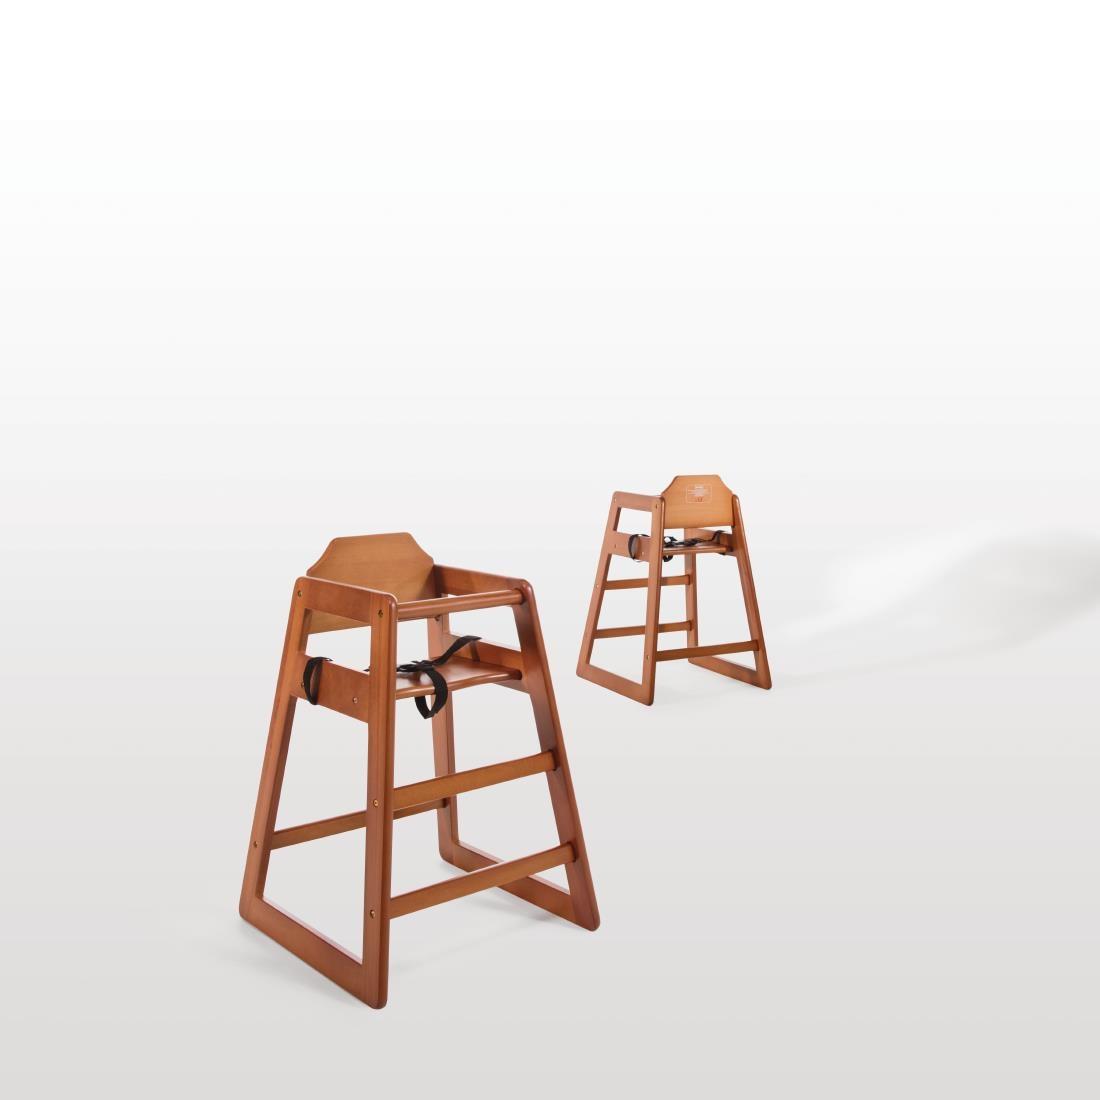 Bolero Wooden Highchair Dark Wood Finish - DL901  - 6